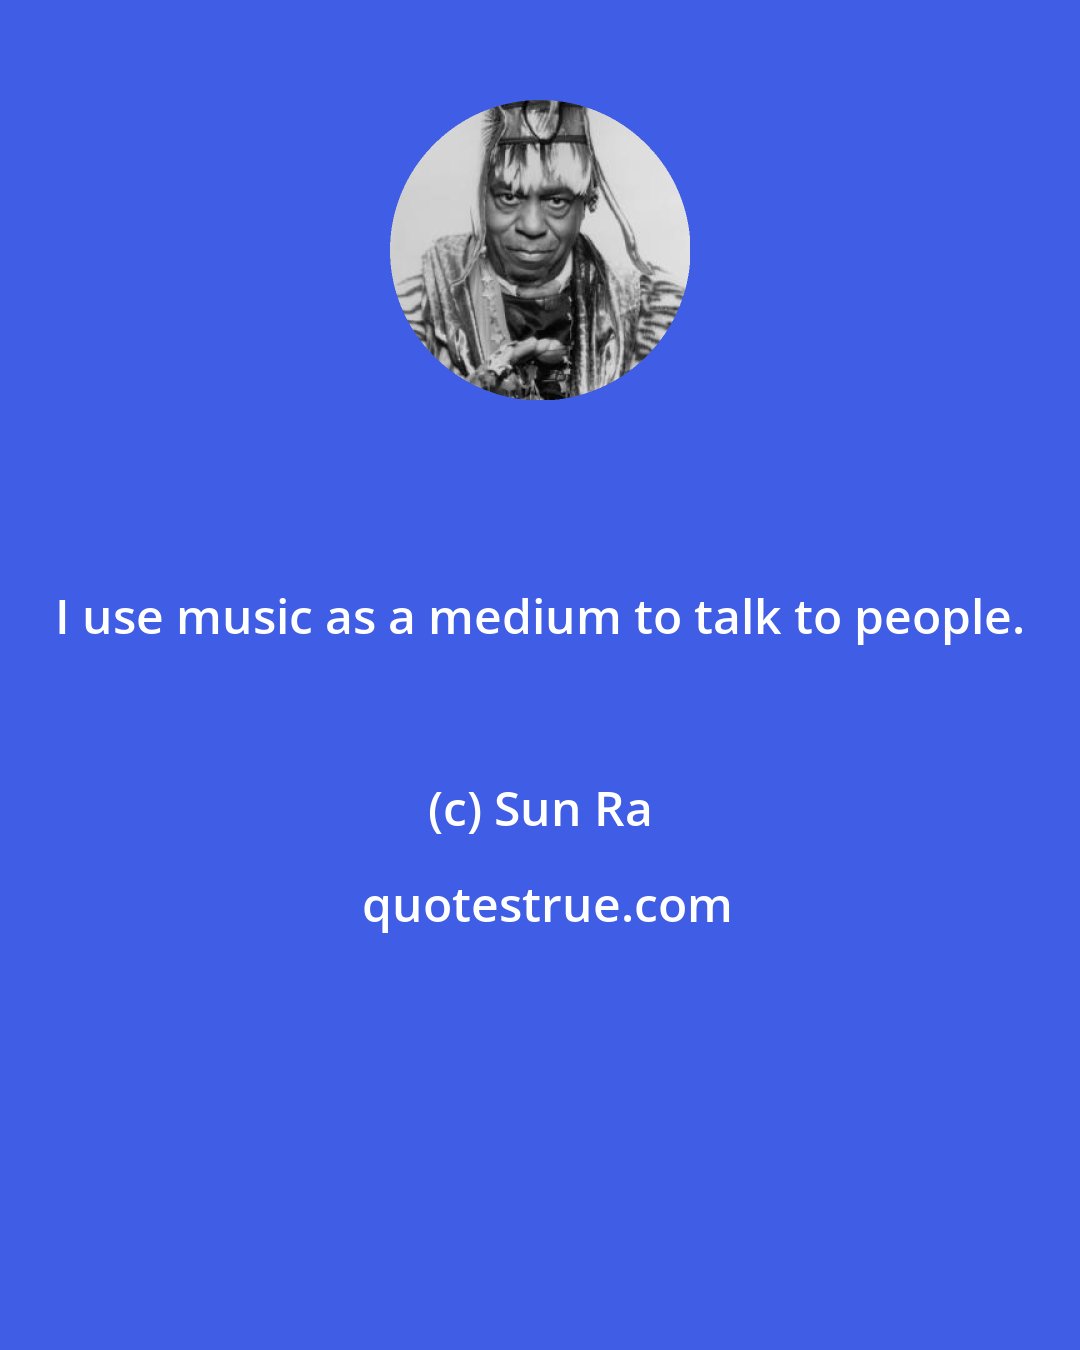 Sun Ra: I use music as a medium to talk to people.